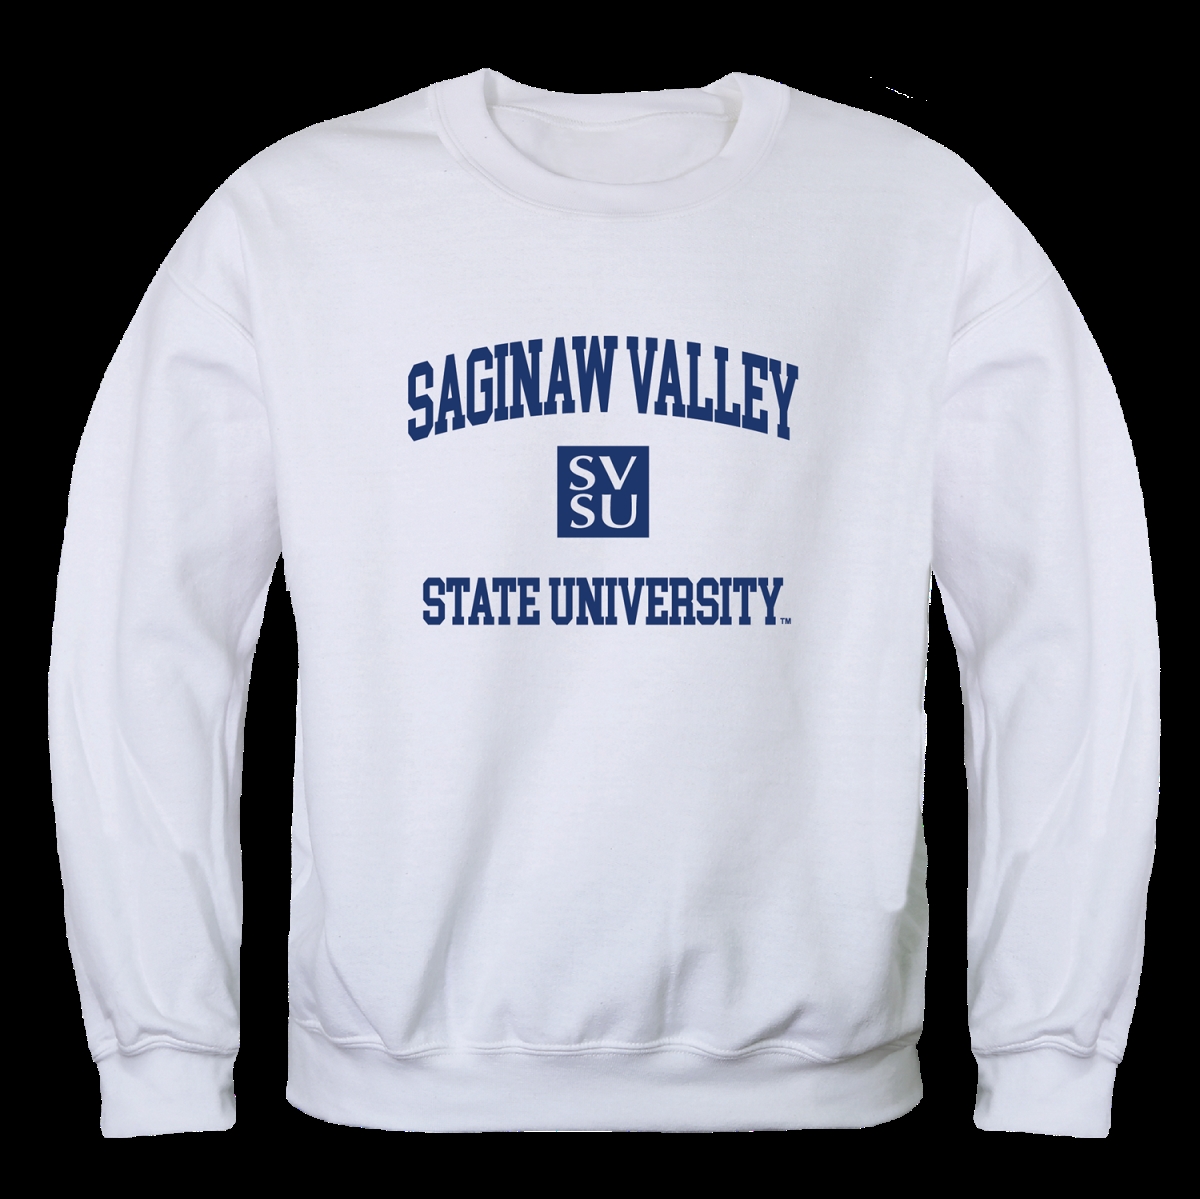 W Republic 568-373-WHT-02 Saginaw Valley State University Cardinals Seal Crewneck Sweatshirt&#44; White - Medium